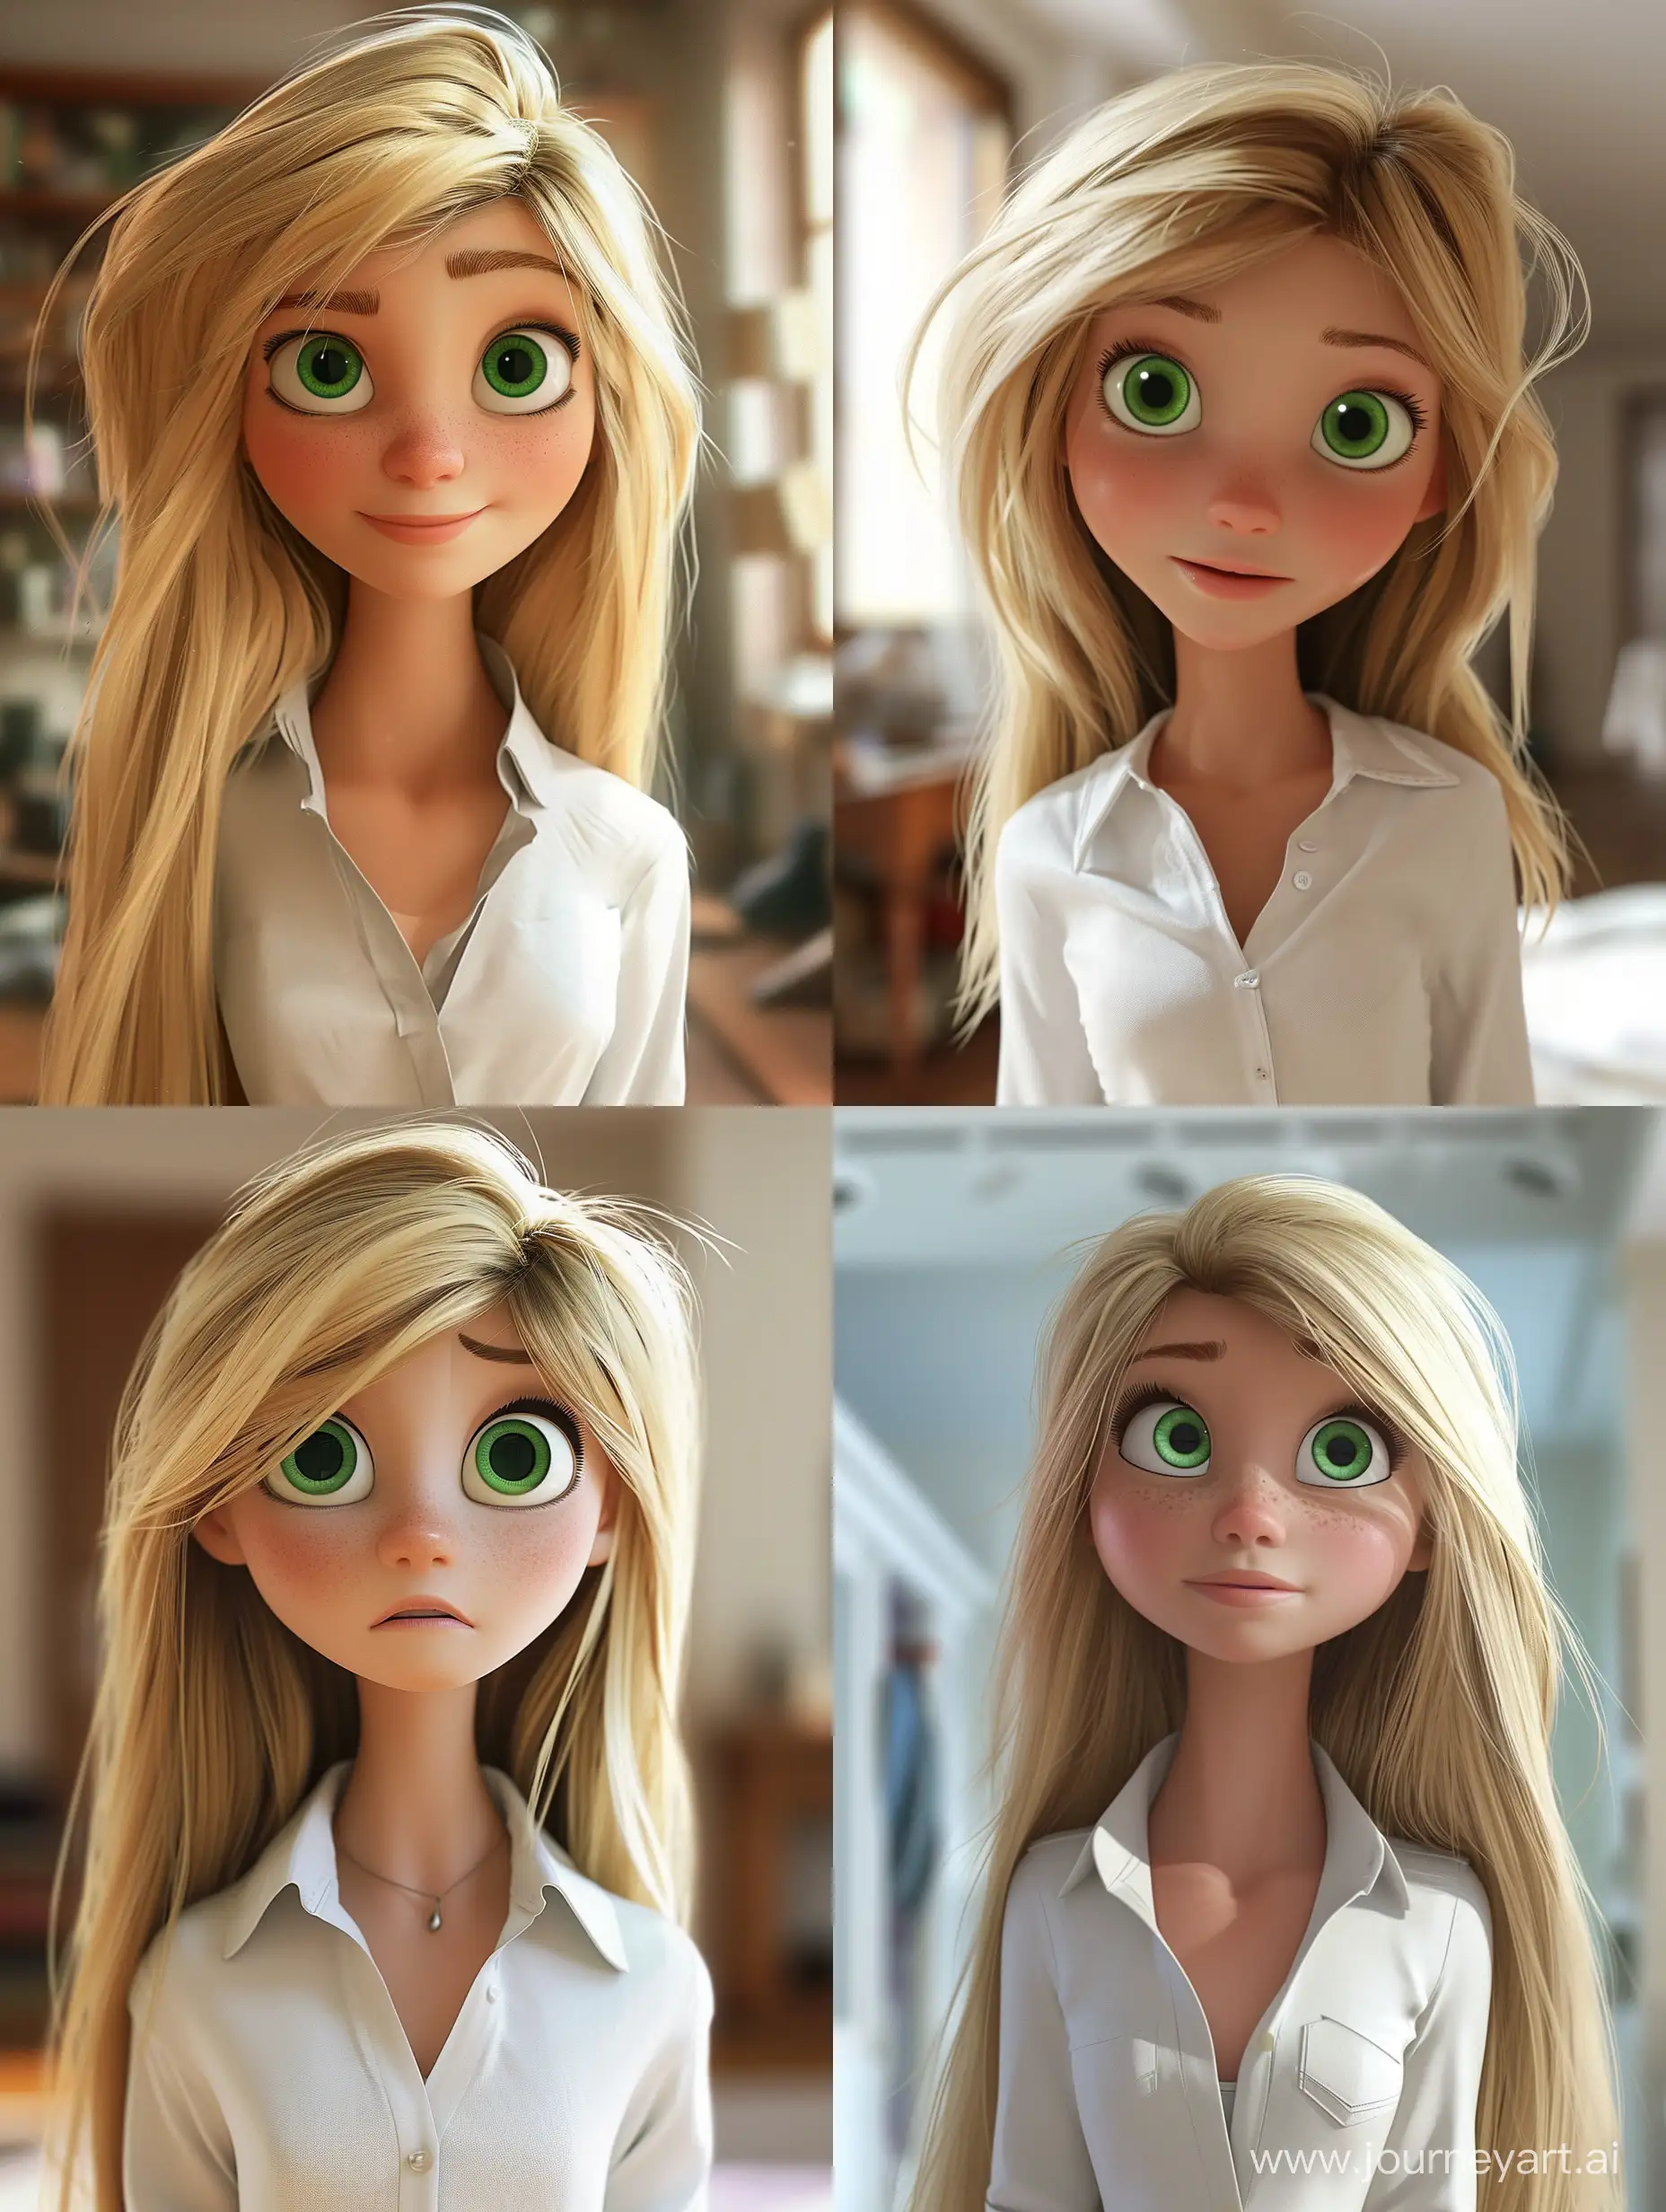 blonde tall girl, pixar animation style, green eyes, wearing a white shirt